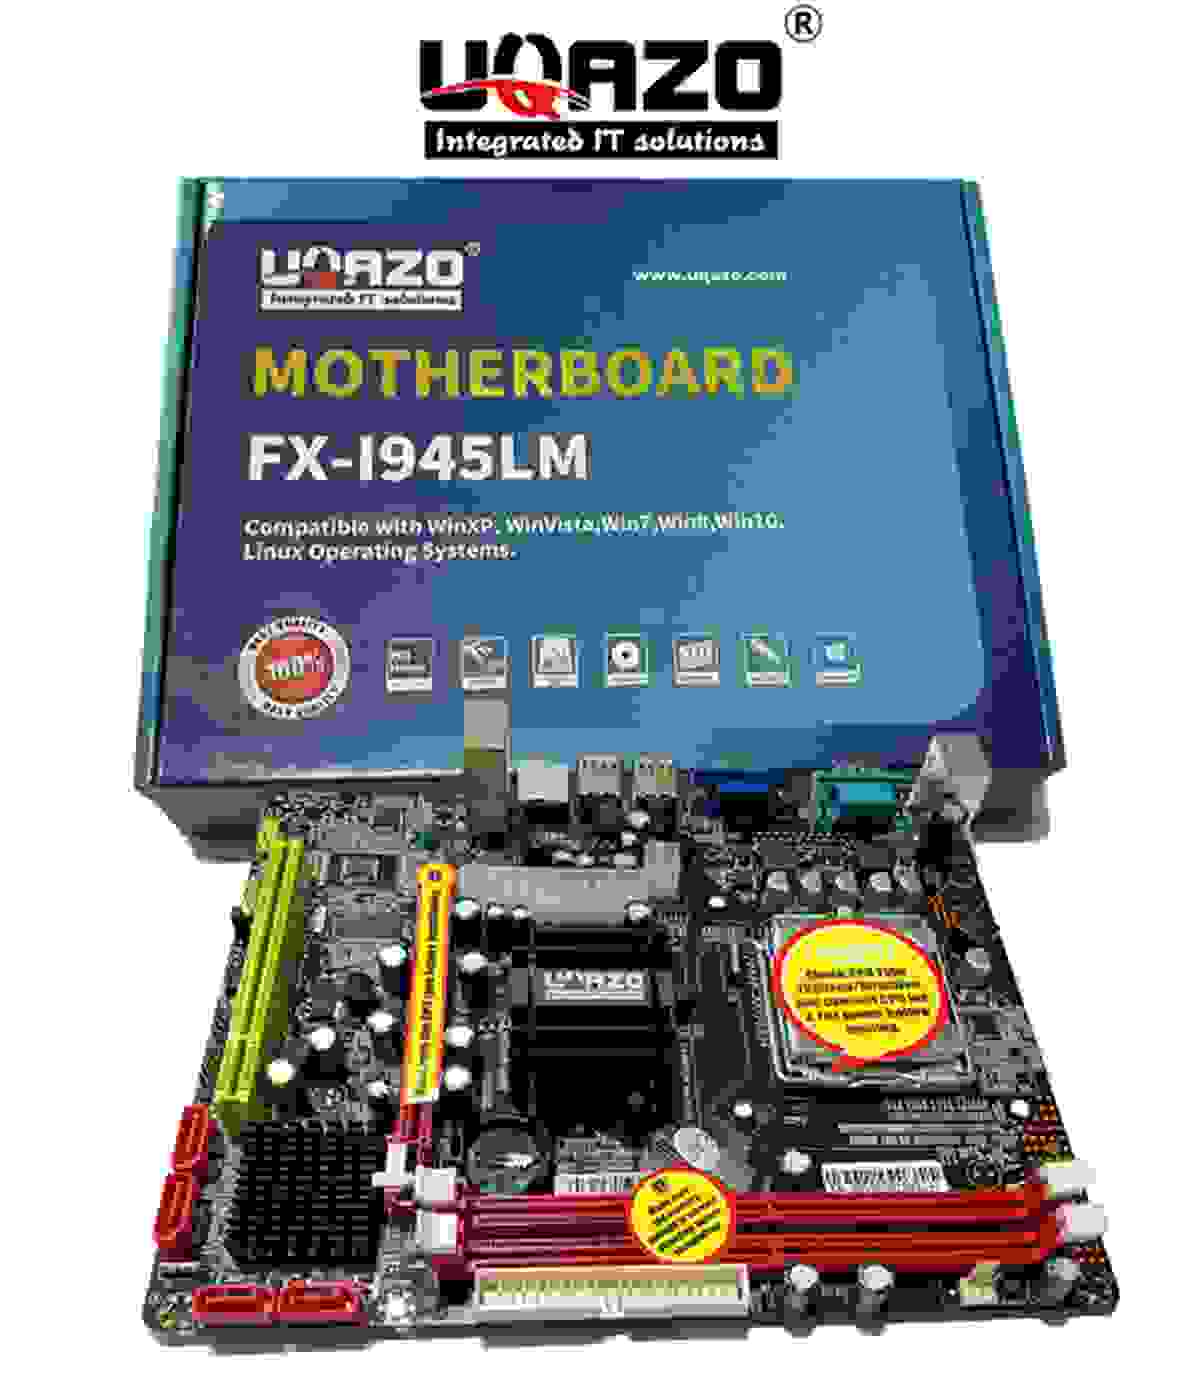 Intel 945 Motherboard | UQAZO 945 Intel Mothboard Price 19 May 2022 Uqazo 945 Desktop Mothboard online shop - HelpingIndia